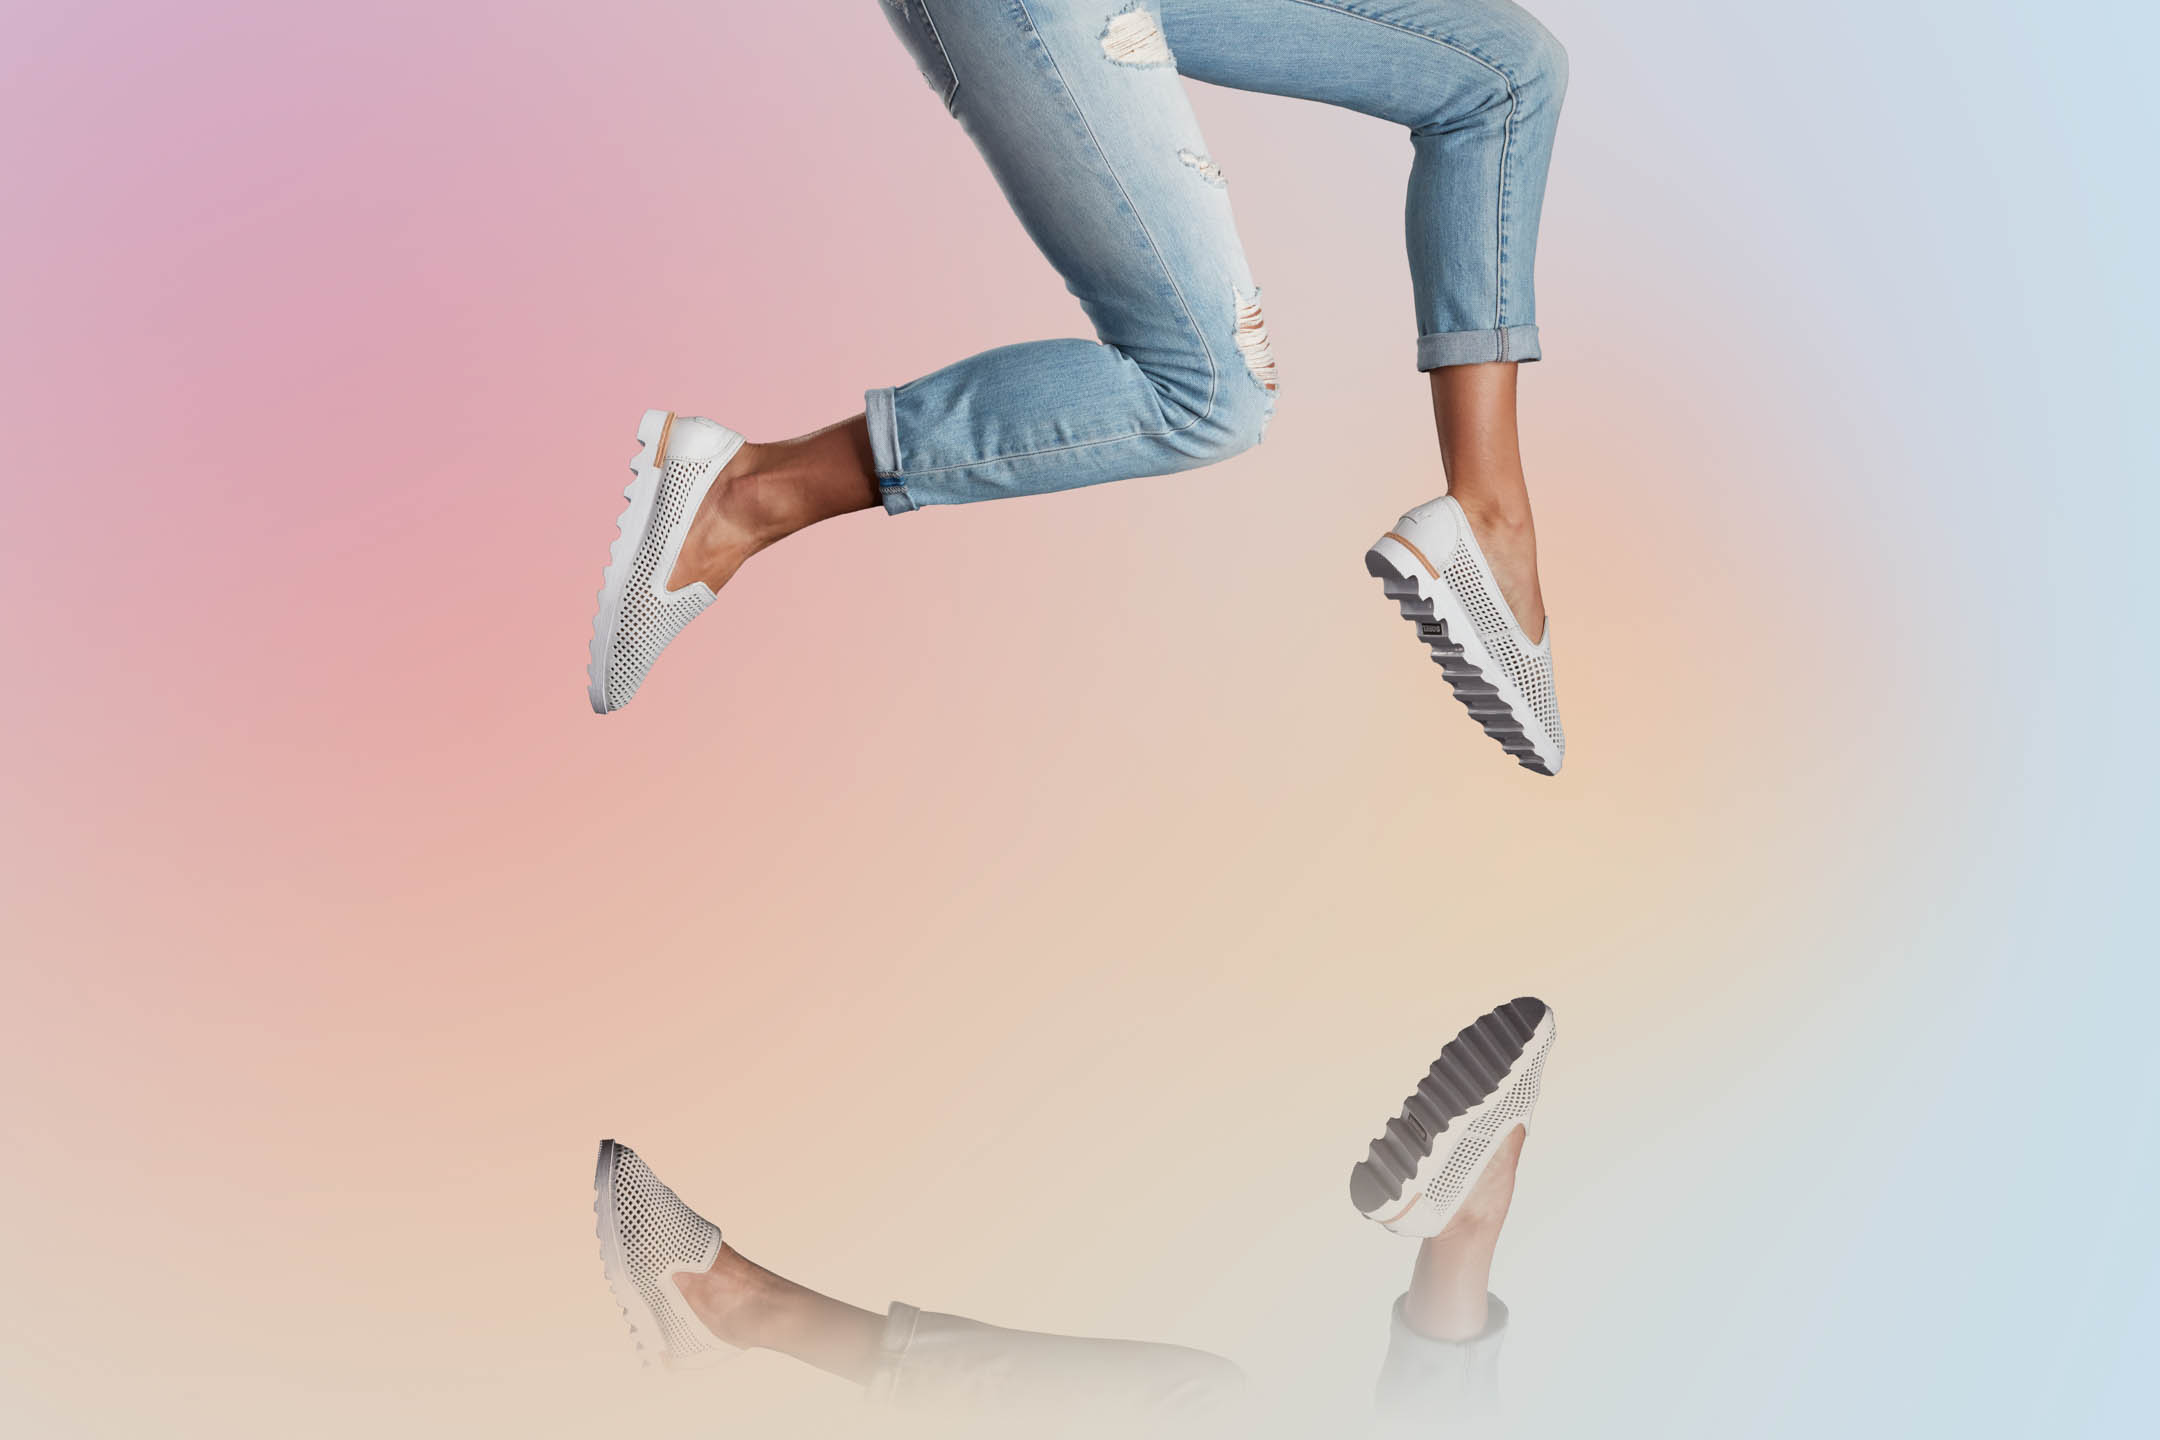 Sorel fashion footwear on model